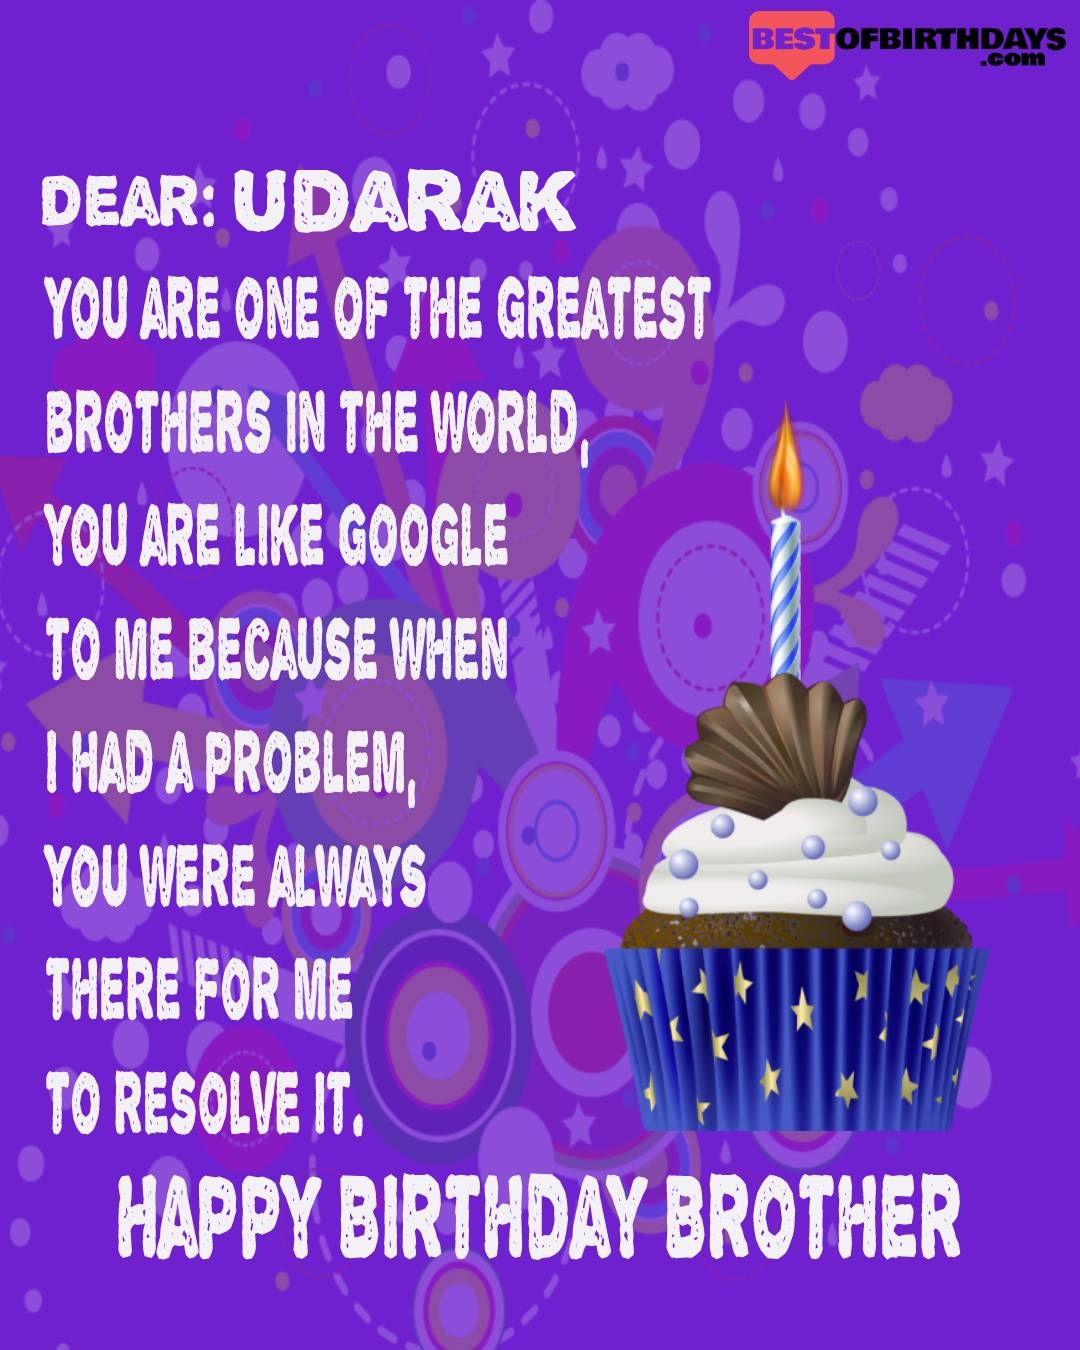 Happy birthday udarak bhai brother bro